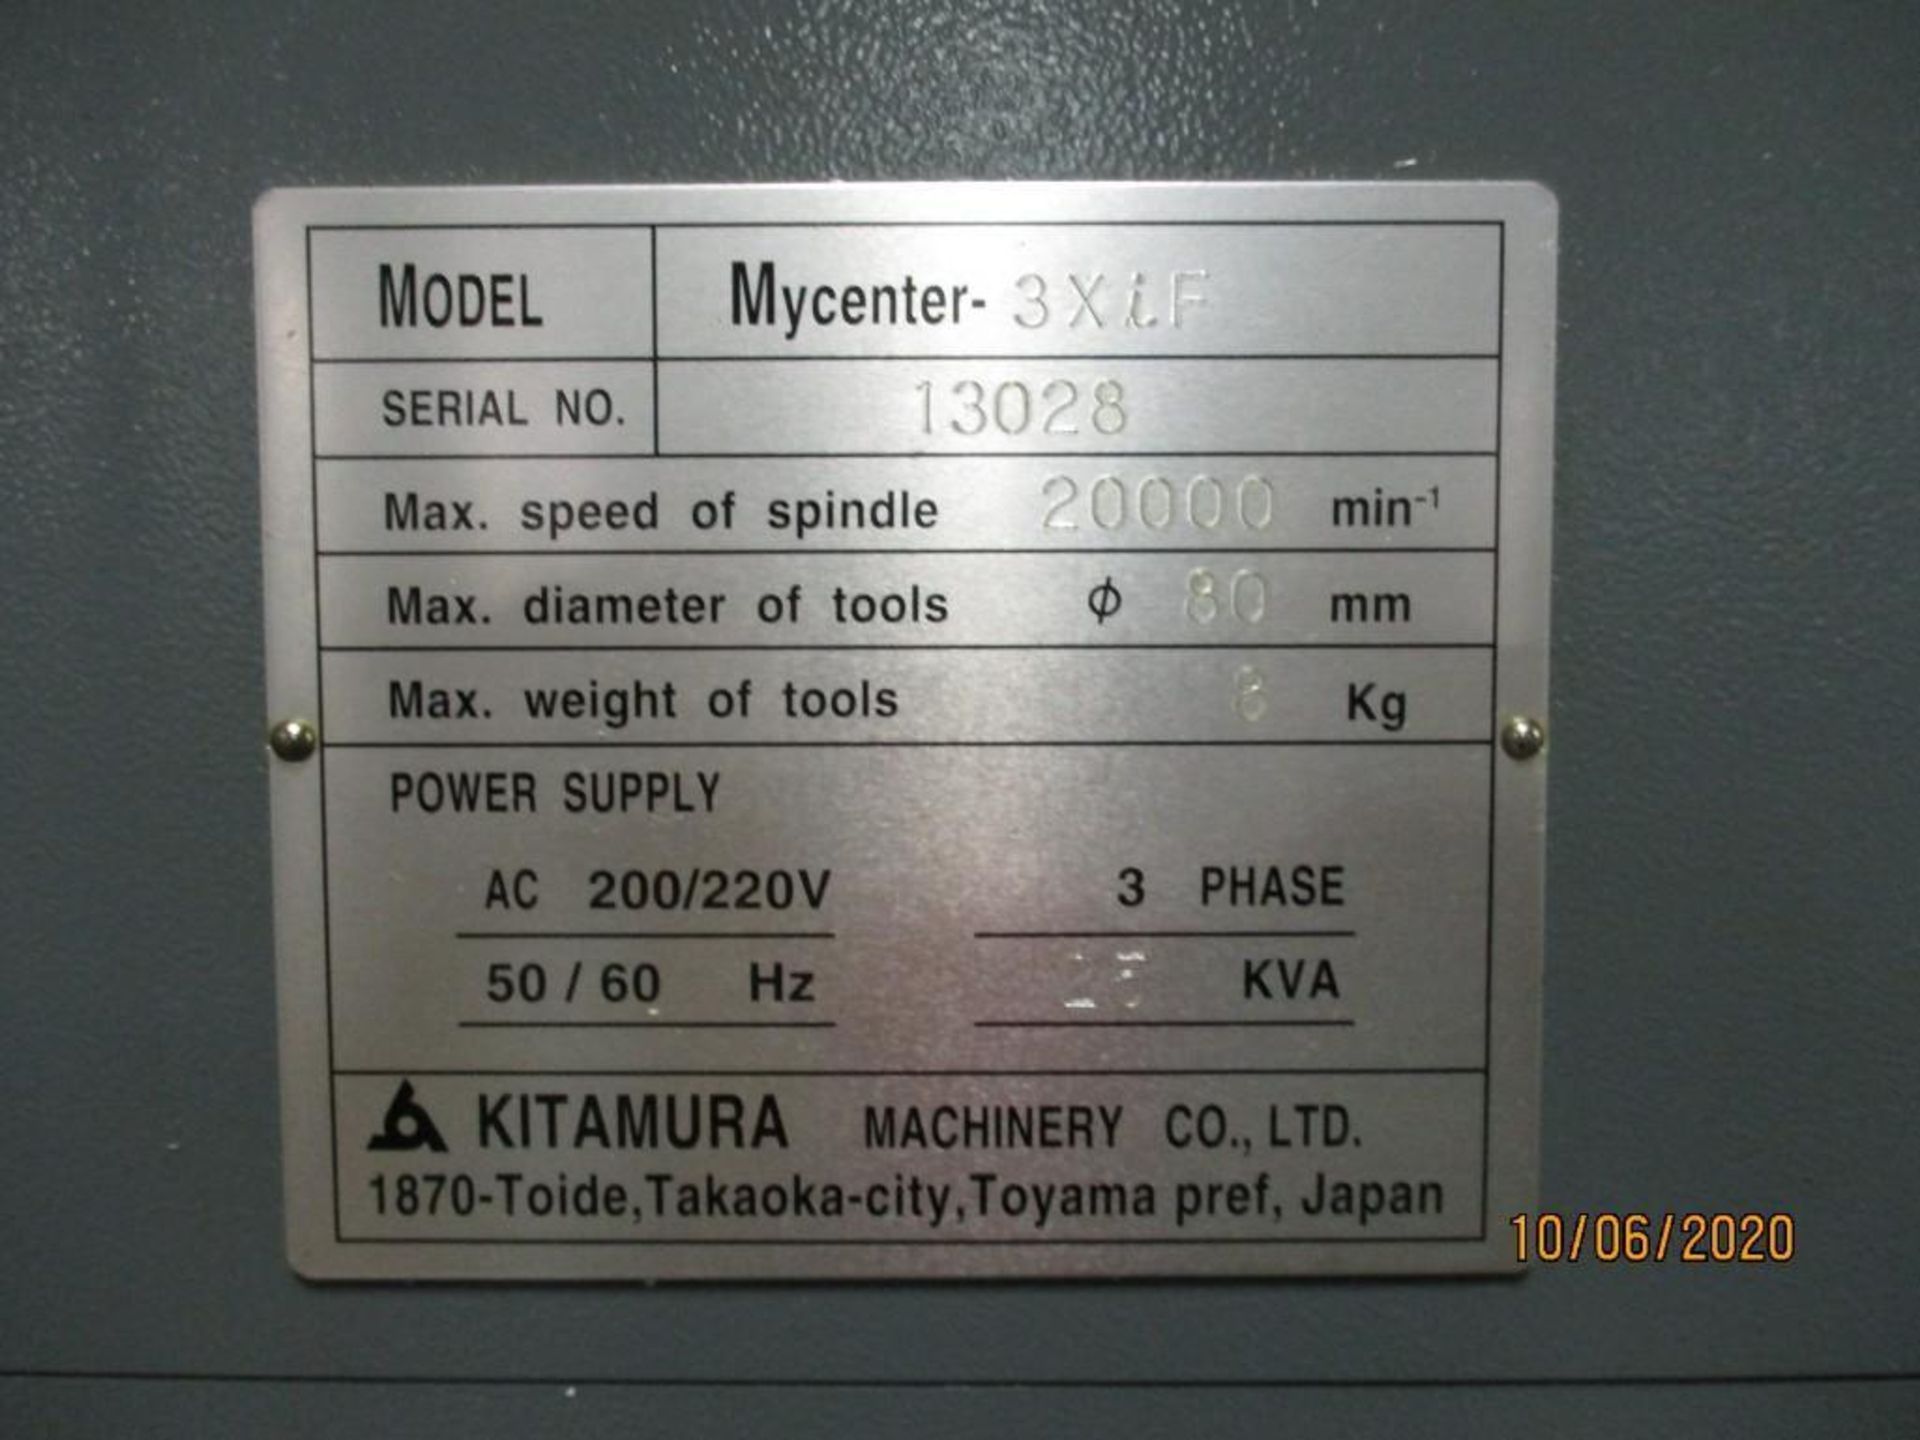 2012 Kitamura My center 3XiF Spark changer CNC Pallet Changer Vert Machining Center, S/N 130238 - Image 9 of 9